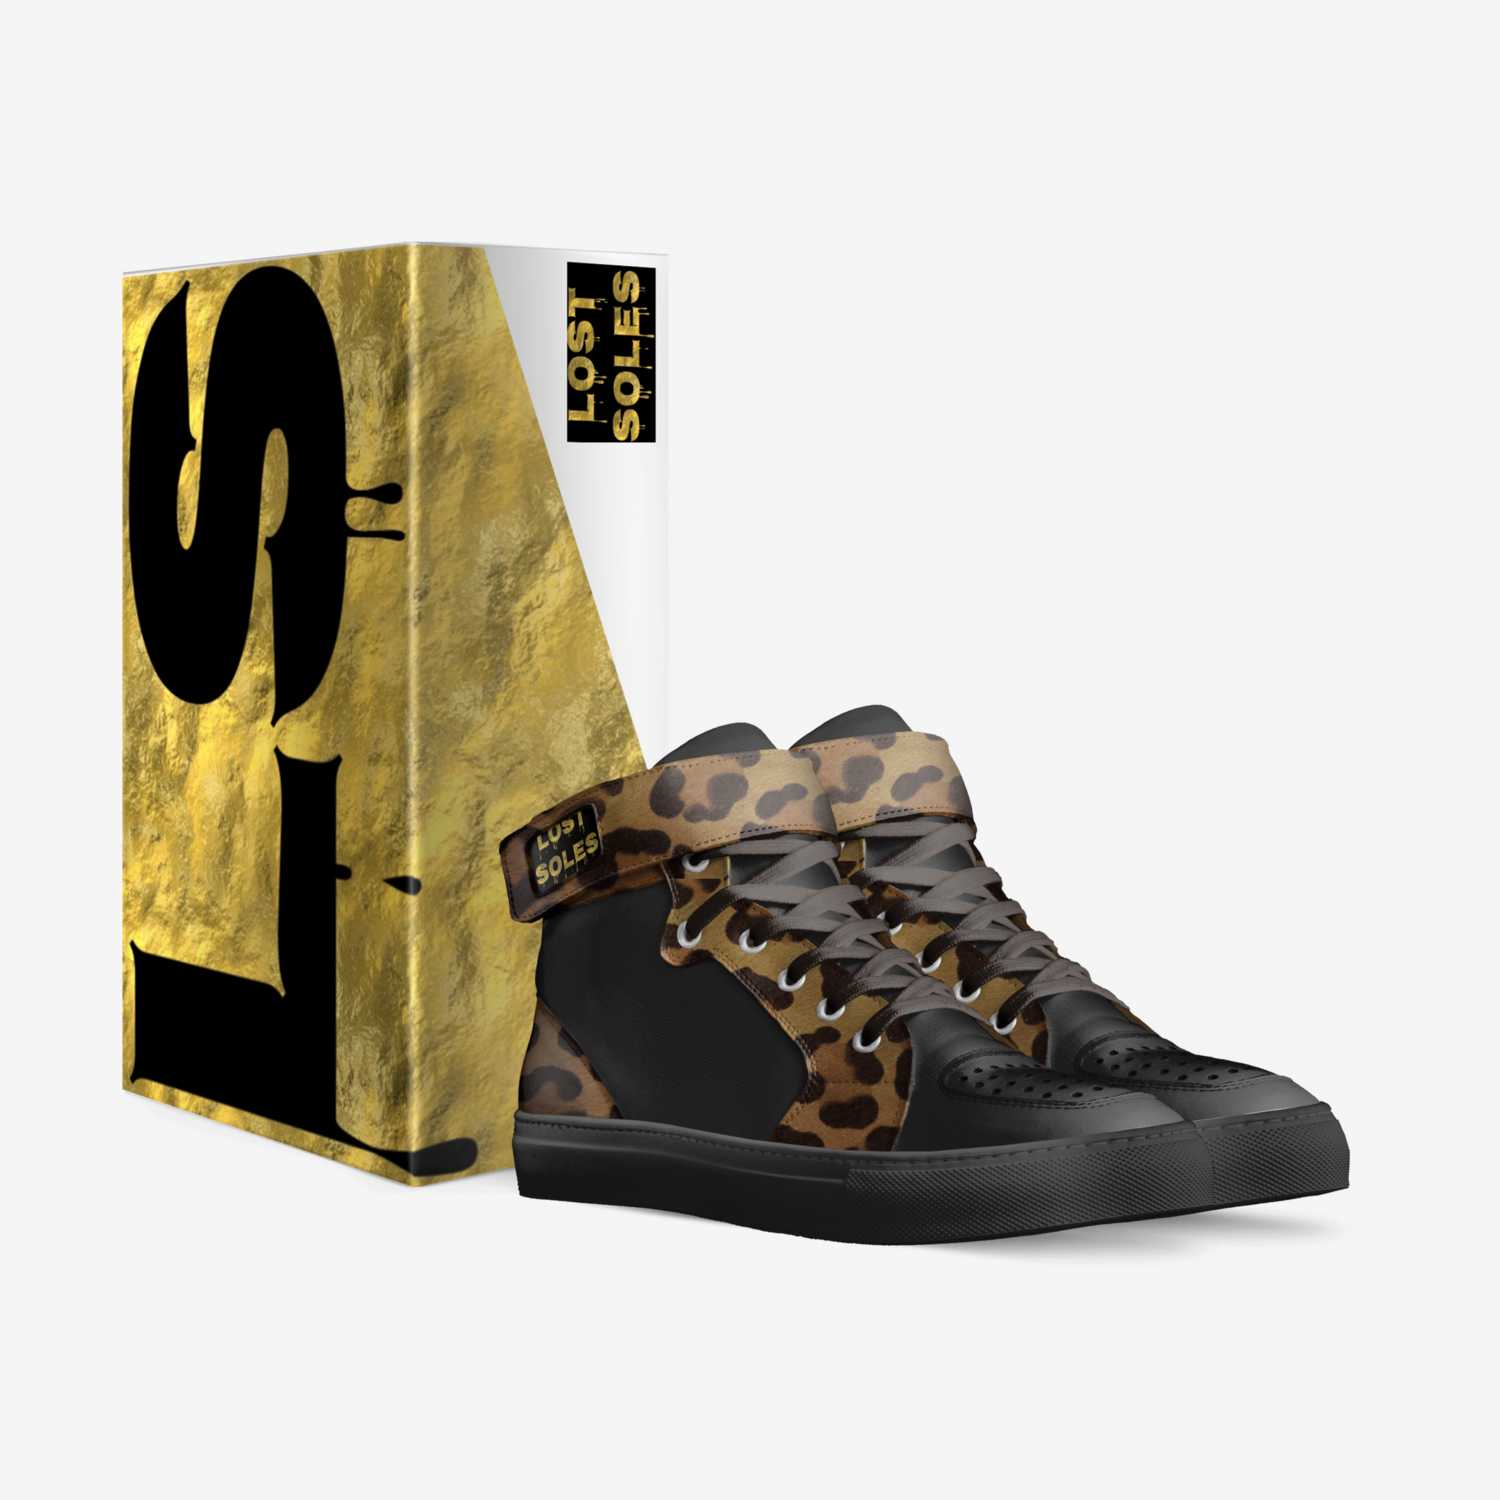 Kickback custom made in Italy shoes by Eddie Woods | Box view